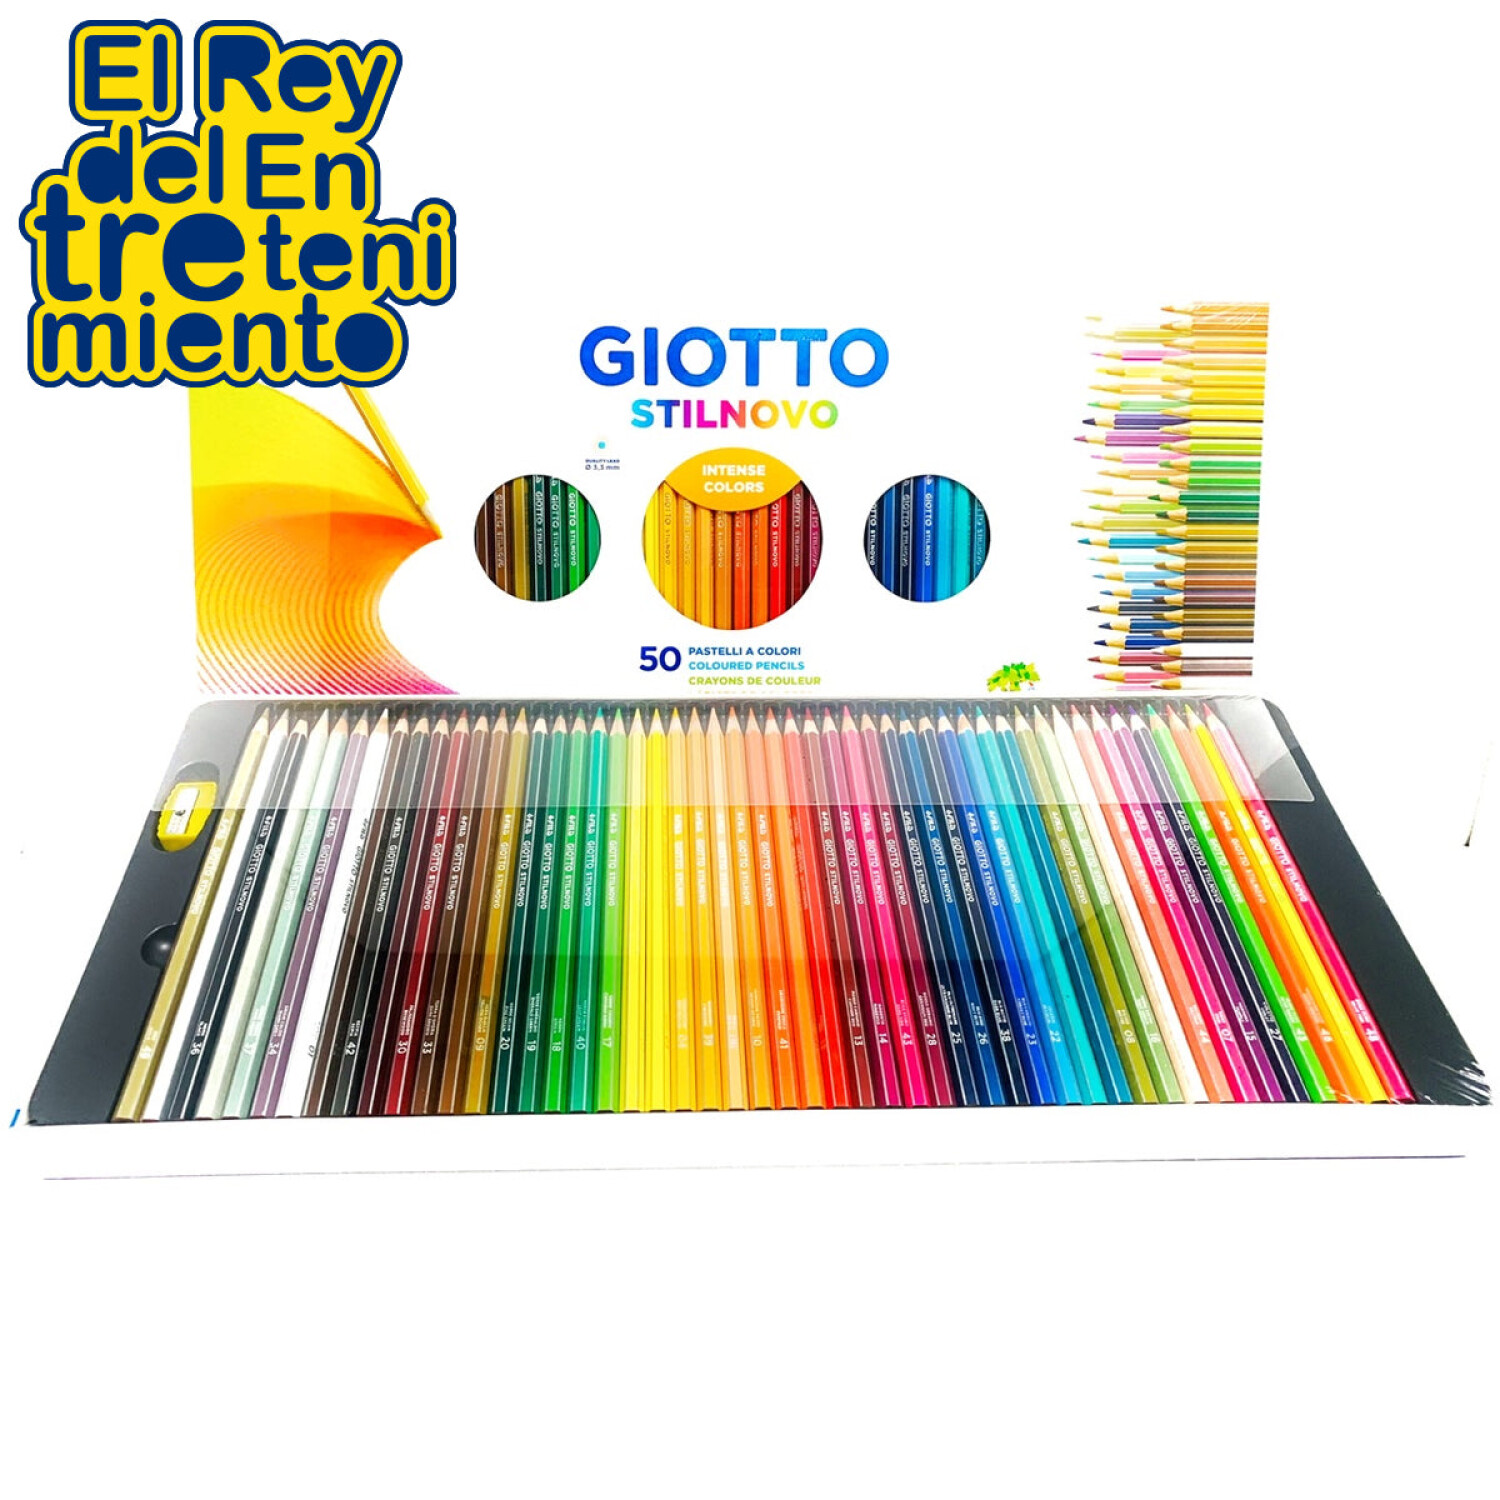 https://f.fcdn.app/imgs/eabfc7/elreydelentretenimiento.com/erdeuy/75e8/original/catalogo/6641346936971_6641346936971_4/1500-1500/lapices-de-colores-giotto-stilnovo-50-unidades-lapices-de-colores-giotto-stilnovo-50-unidades.jpg